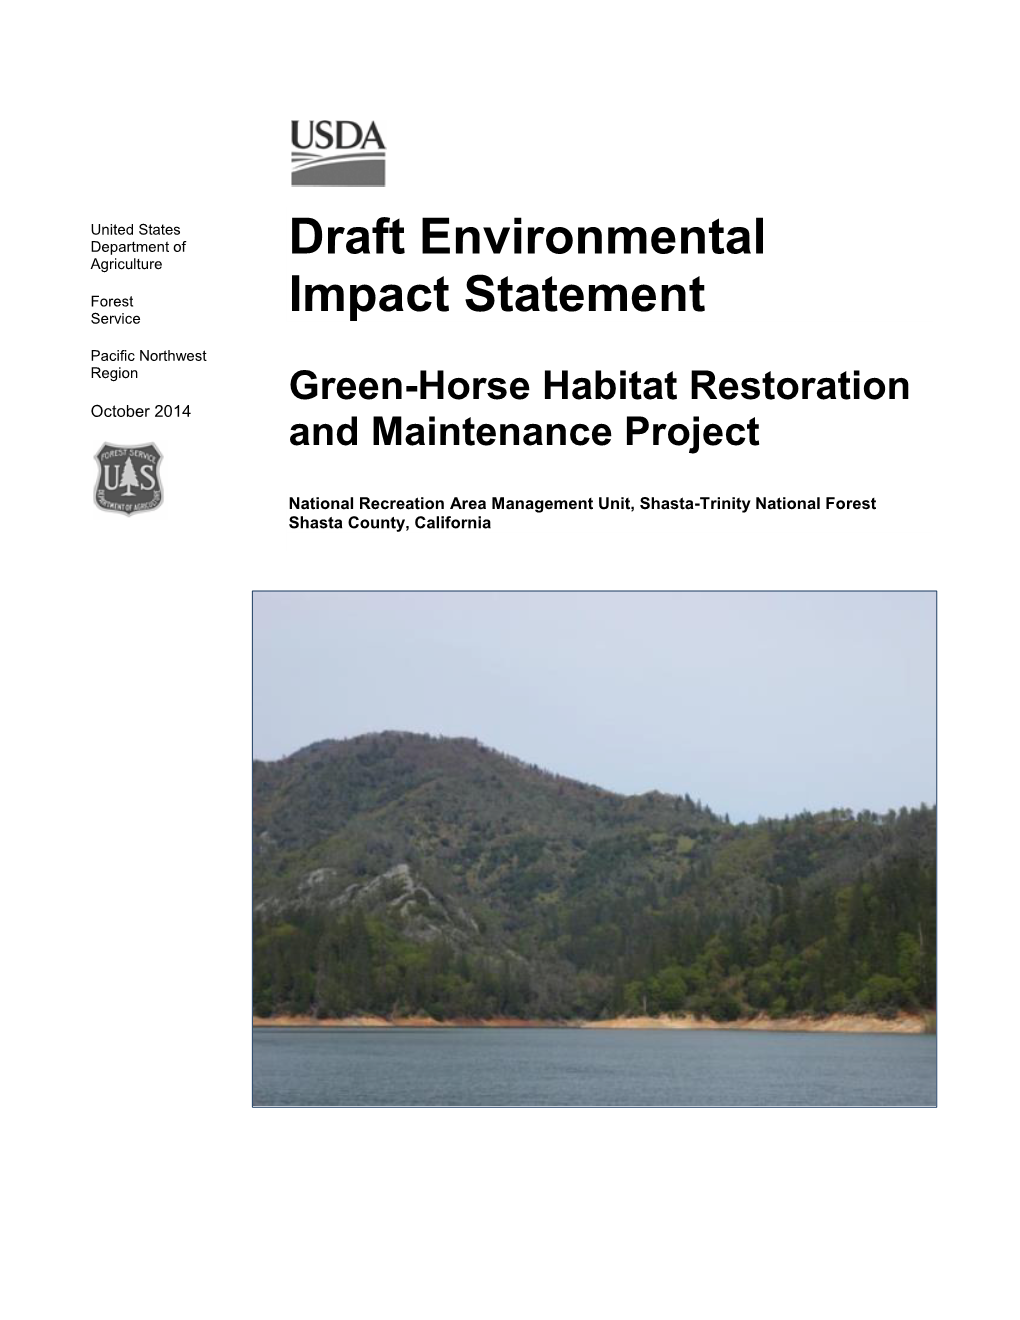 Green-Horse Habitat Restoration and Maintenance Project